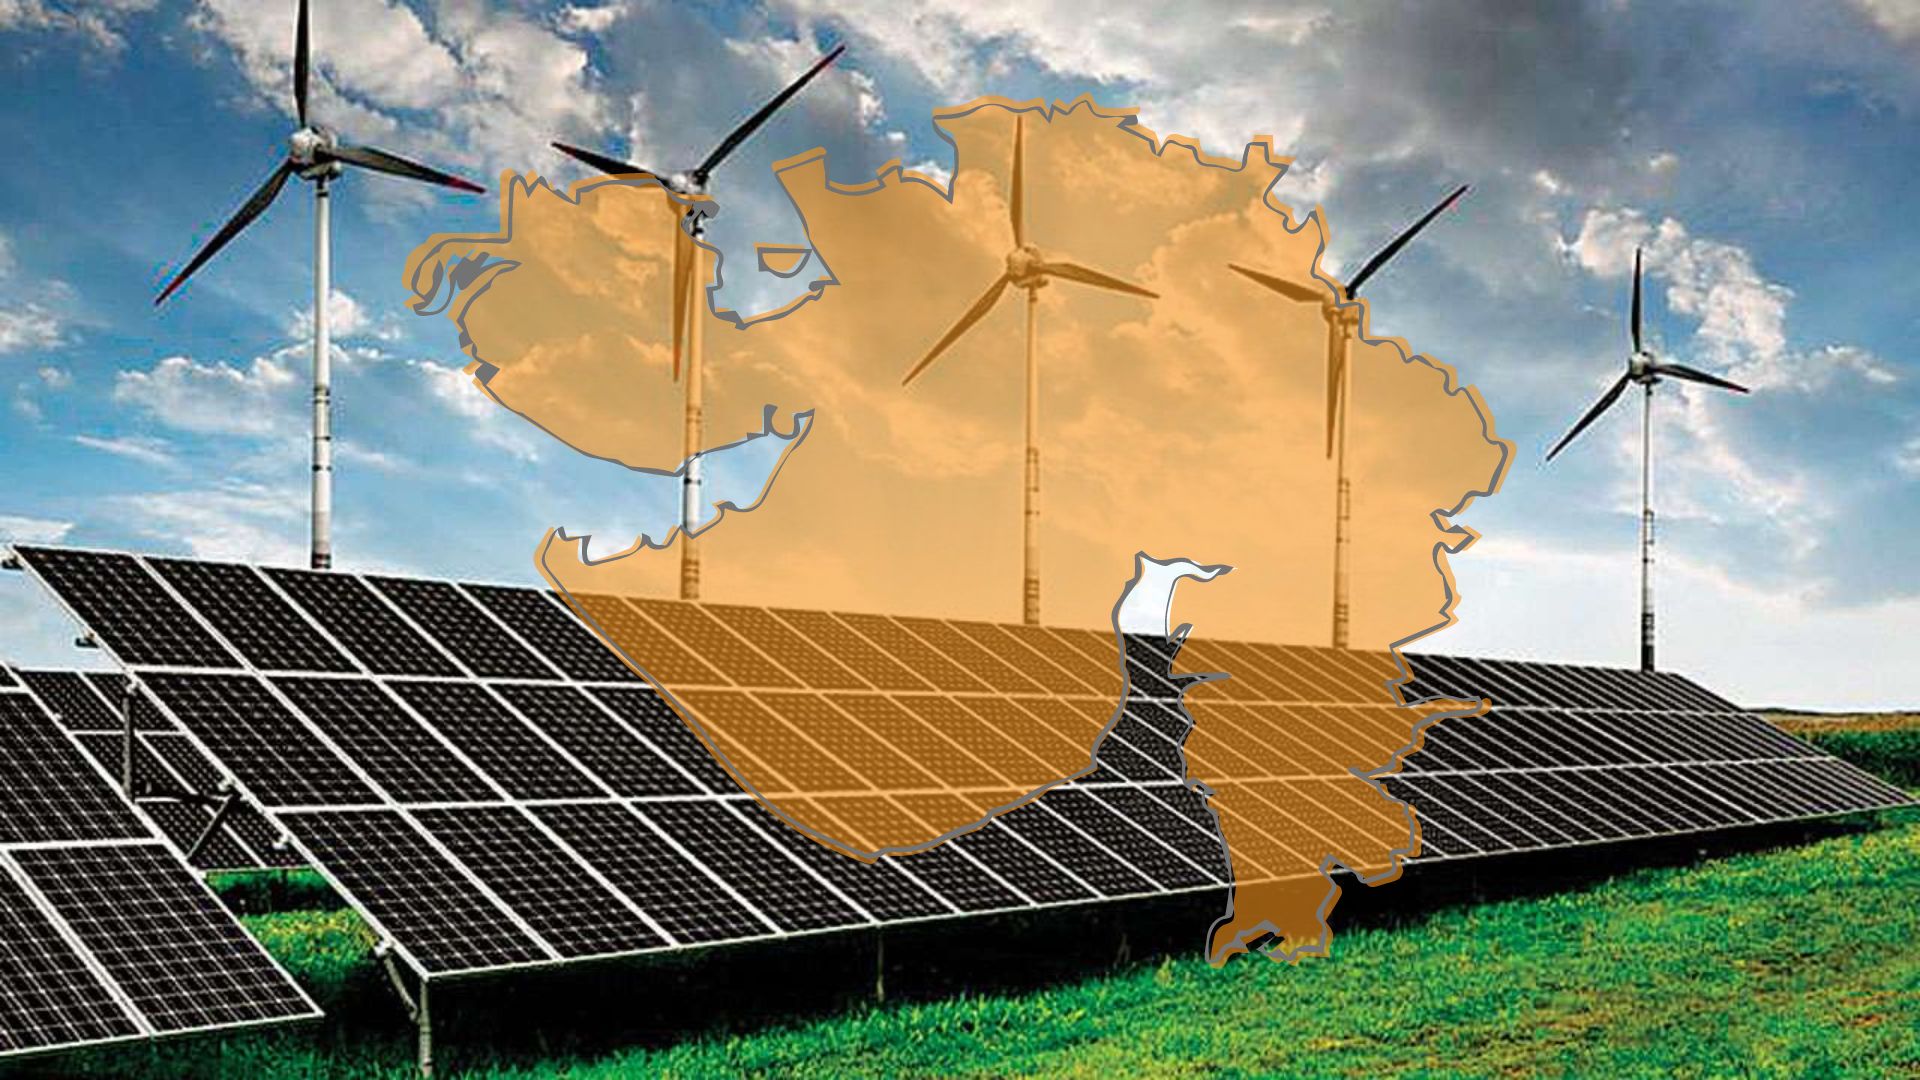 Lakadia-Vadodara green energy transmission project commissioned